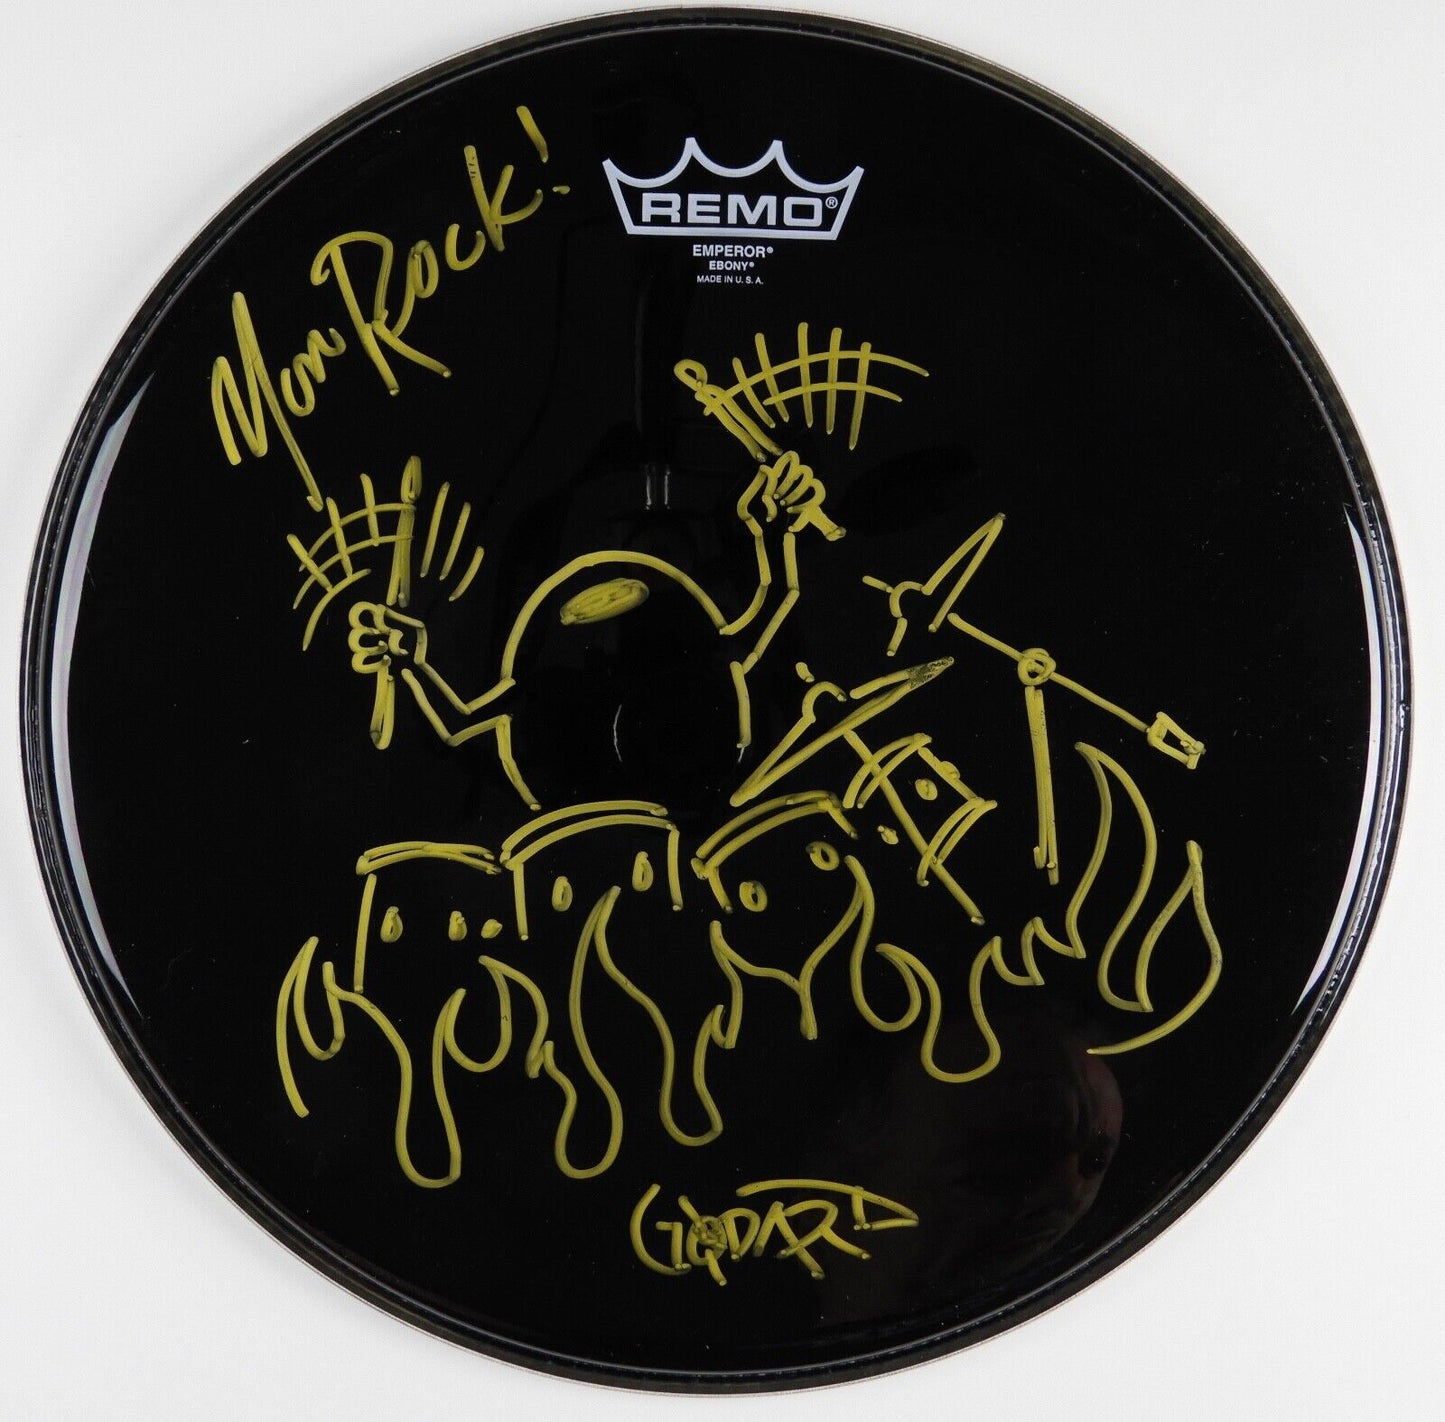 Michael Godard Signed Autograph Drum Head 13" Custom Art Hand Sketch